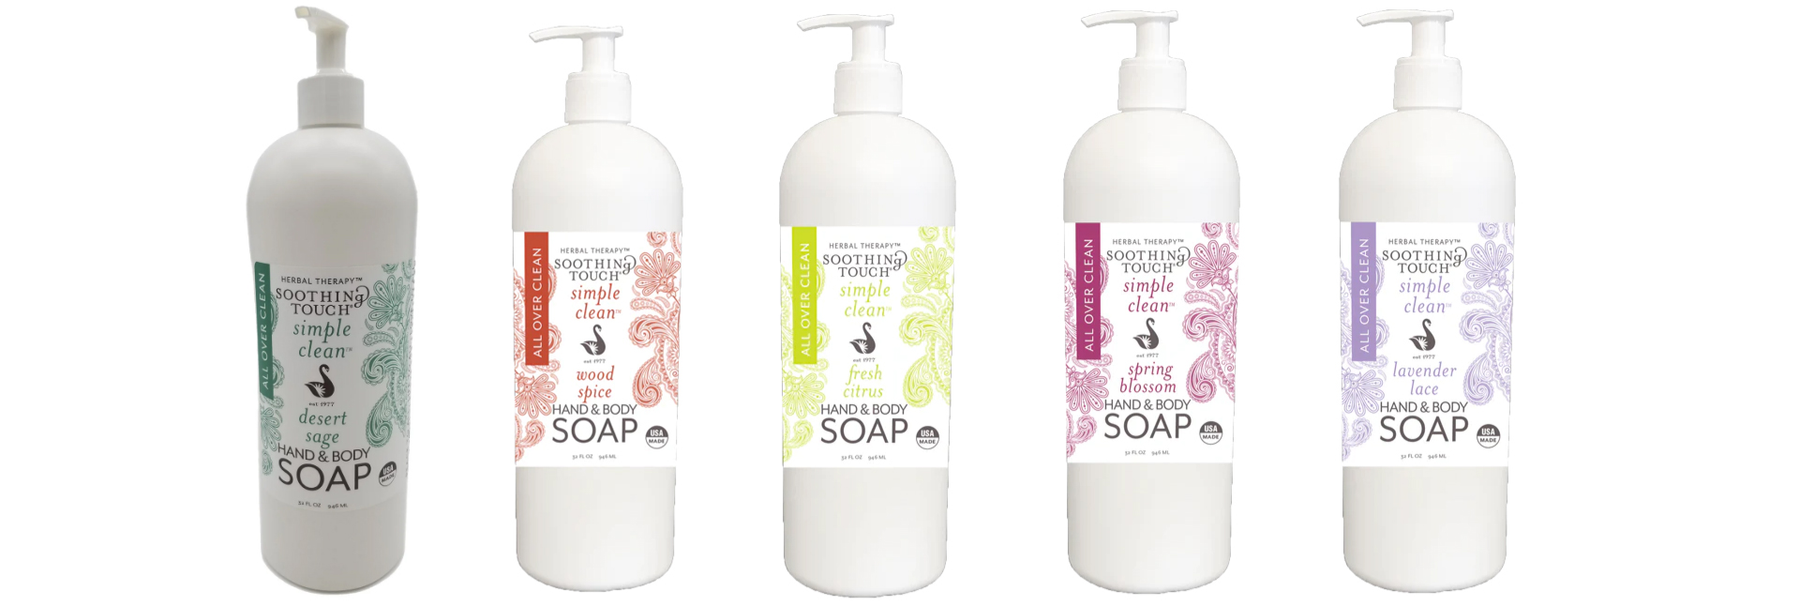 Hand-Body-Soap